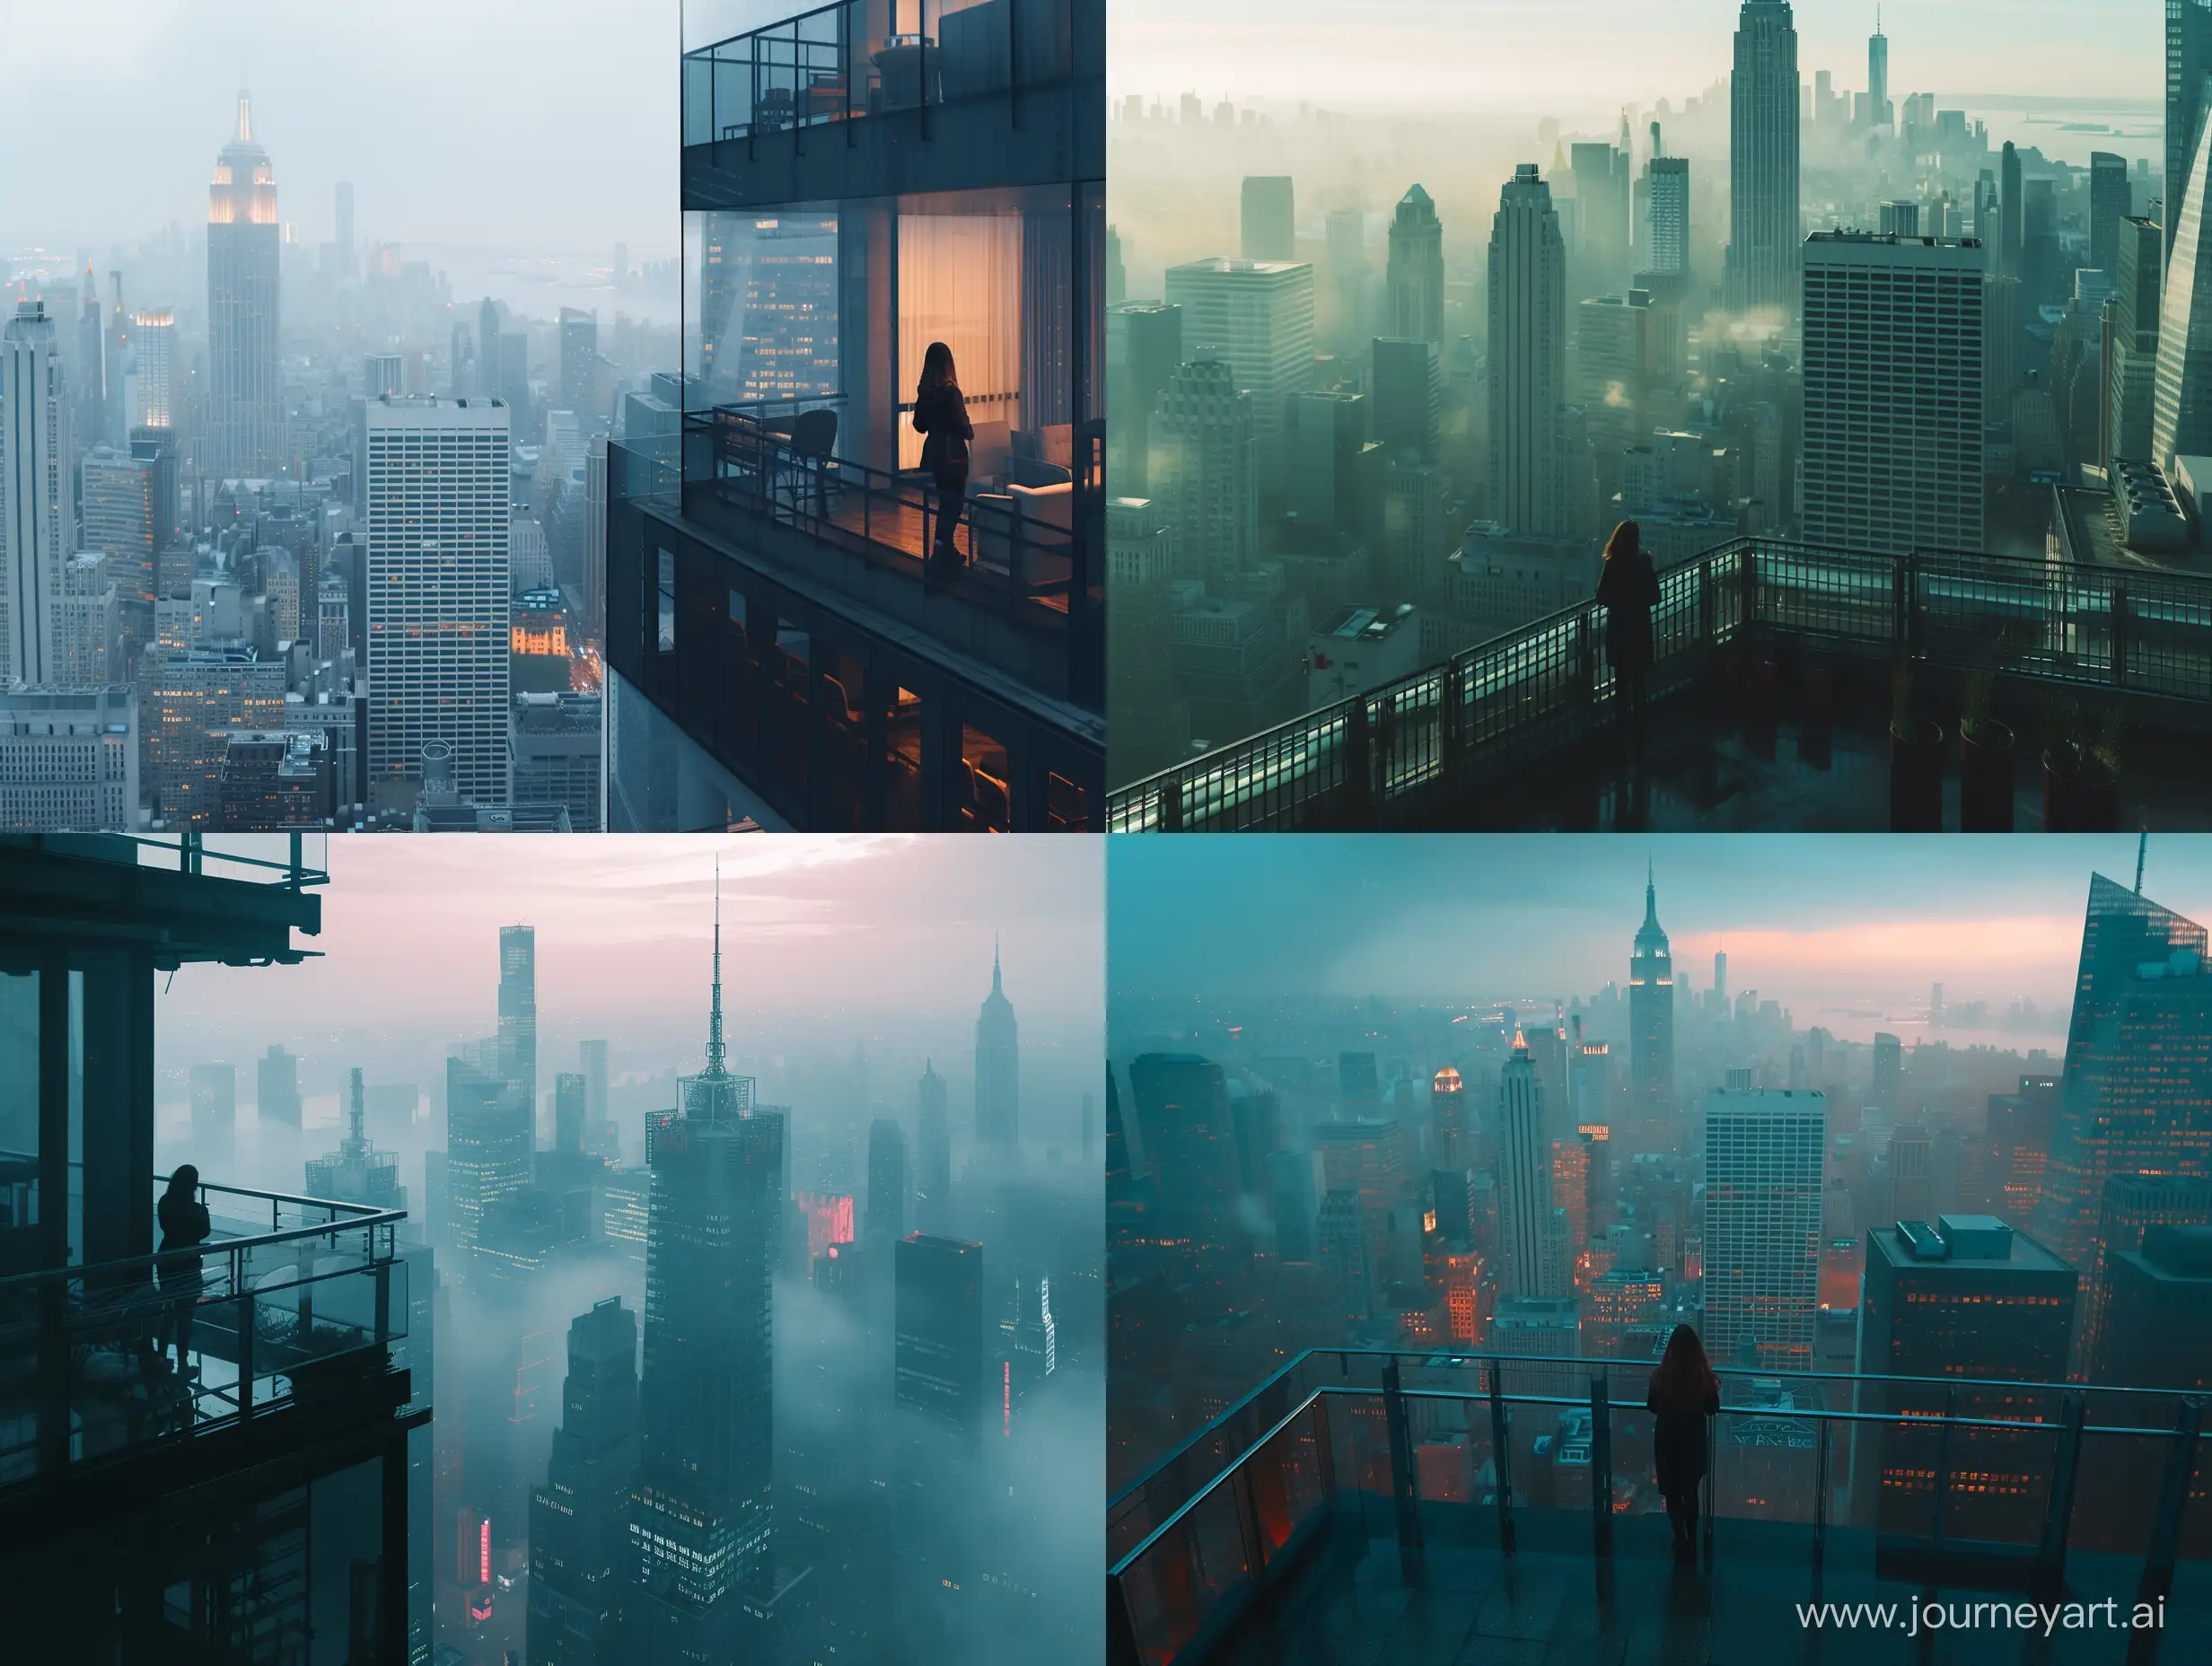 Vivid-Dystopian-New-York-City-Skyline-with-Woman-on-Balcony